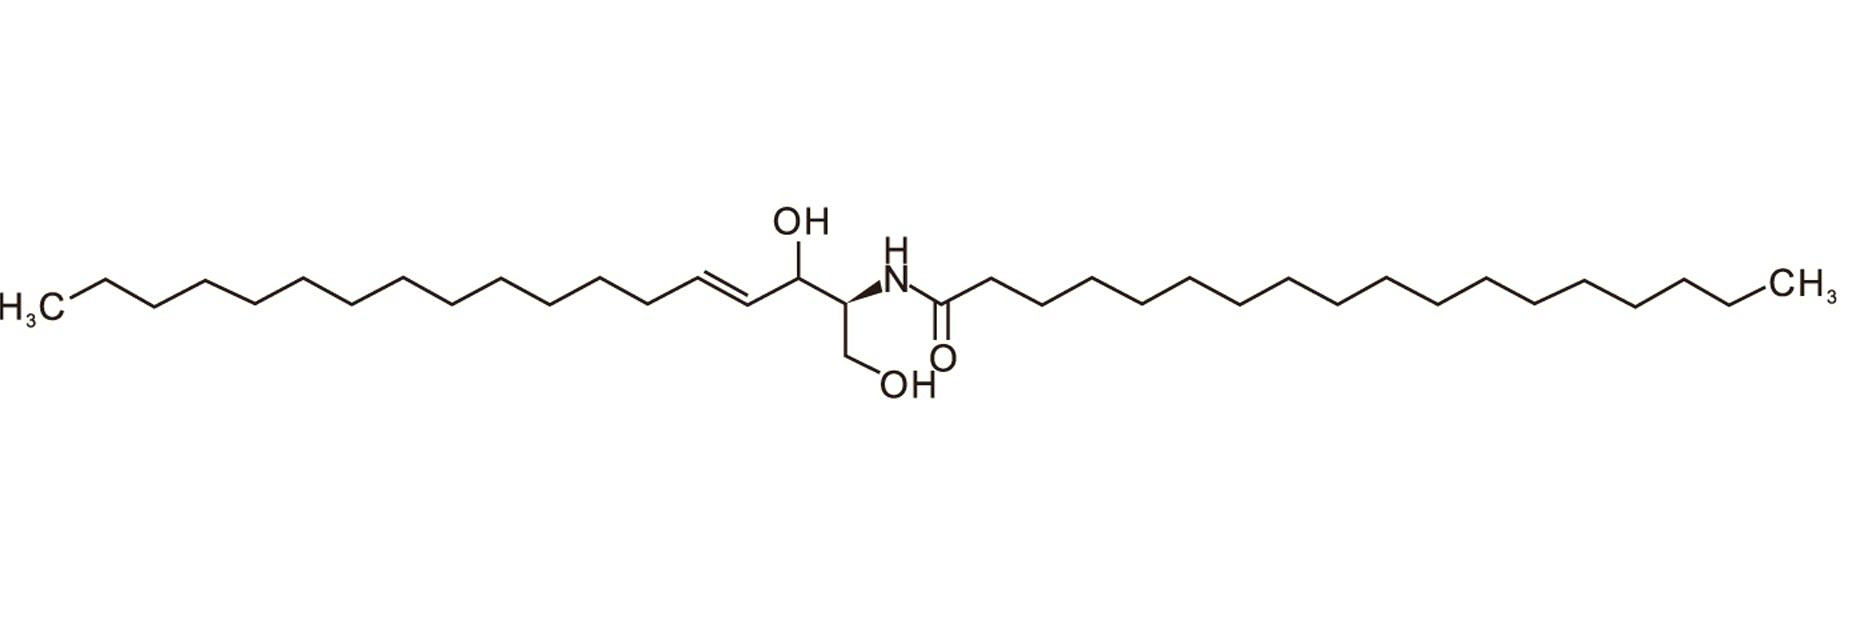 N-stearoyl-D-erythro-sphingosine